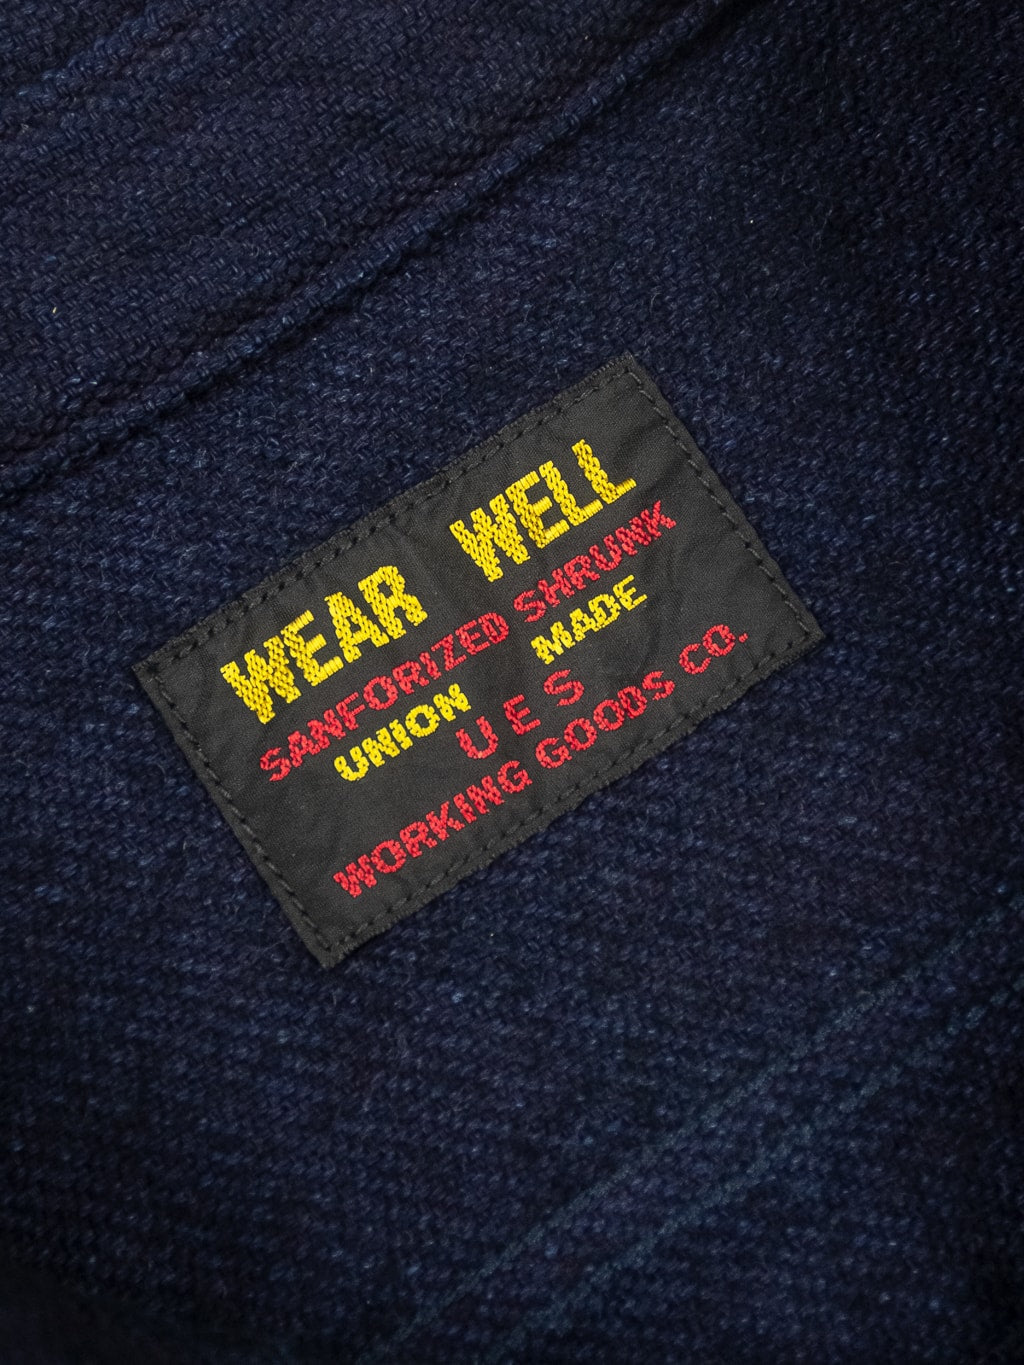 UES Indigo Heavy Selvedge Flannel Shirt brand tag